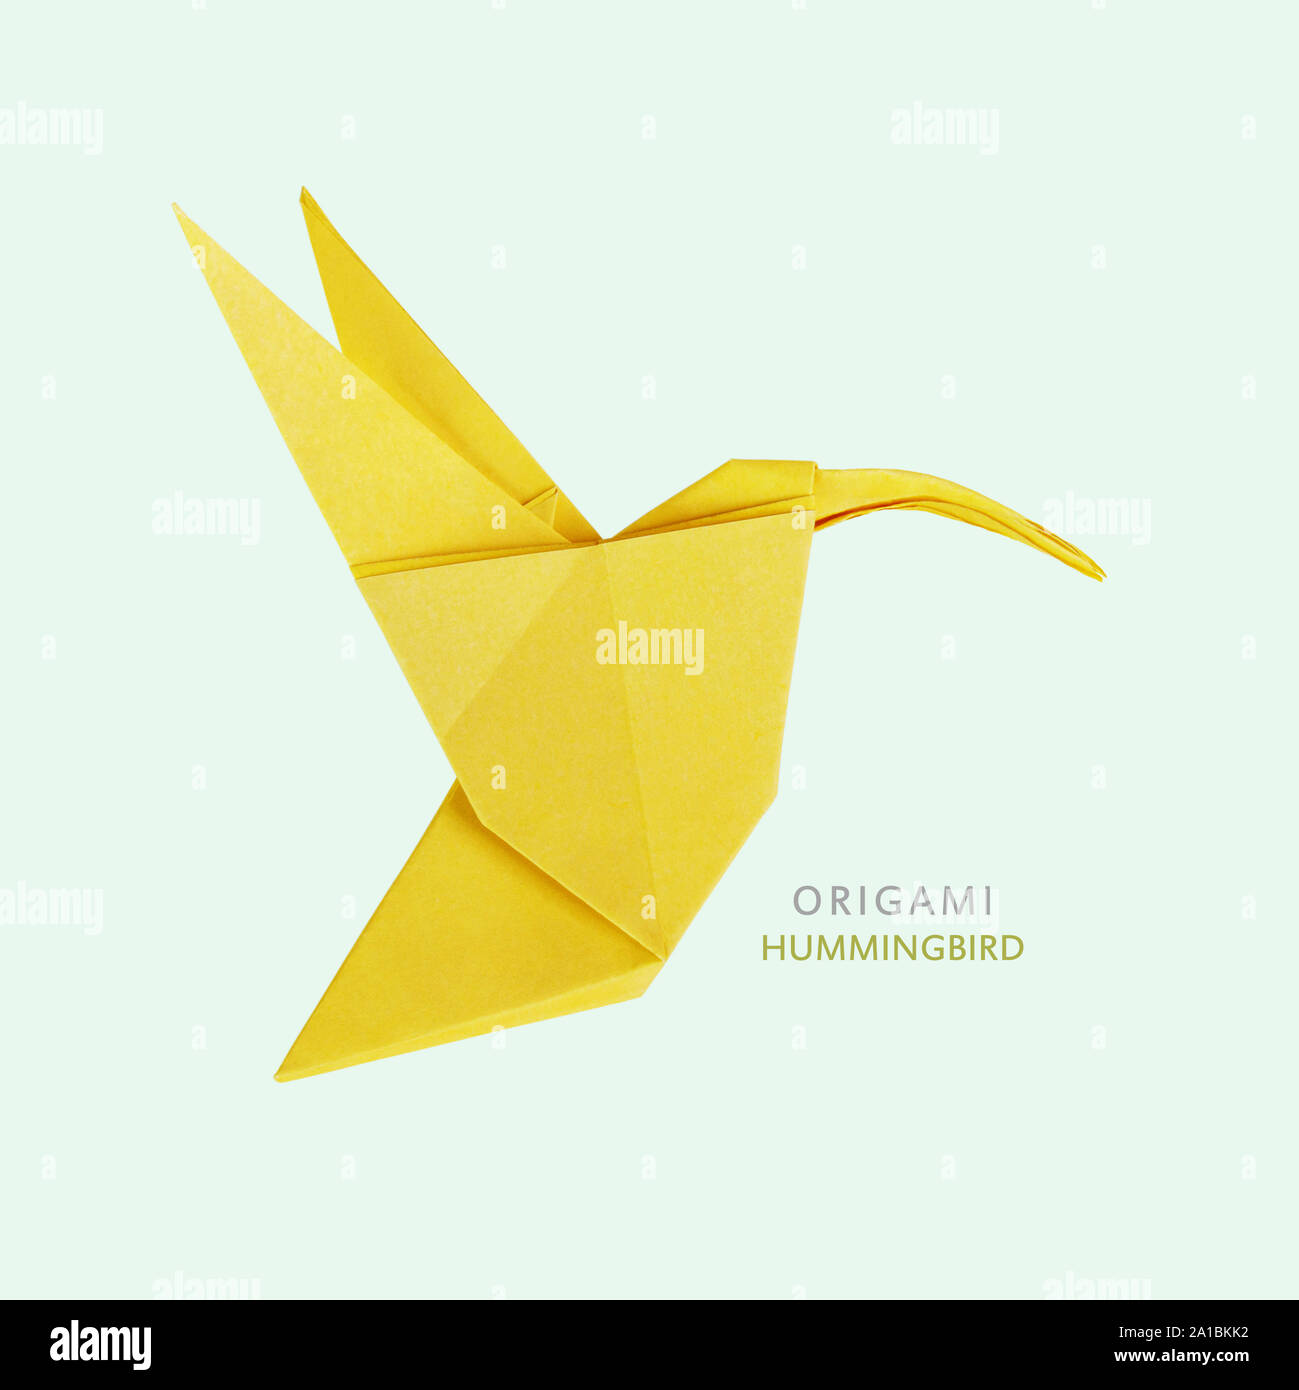 Origami art hummingbird Stock Photo